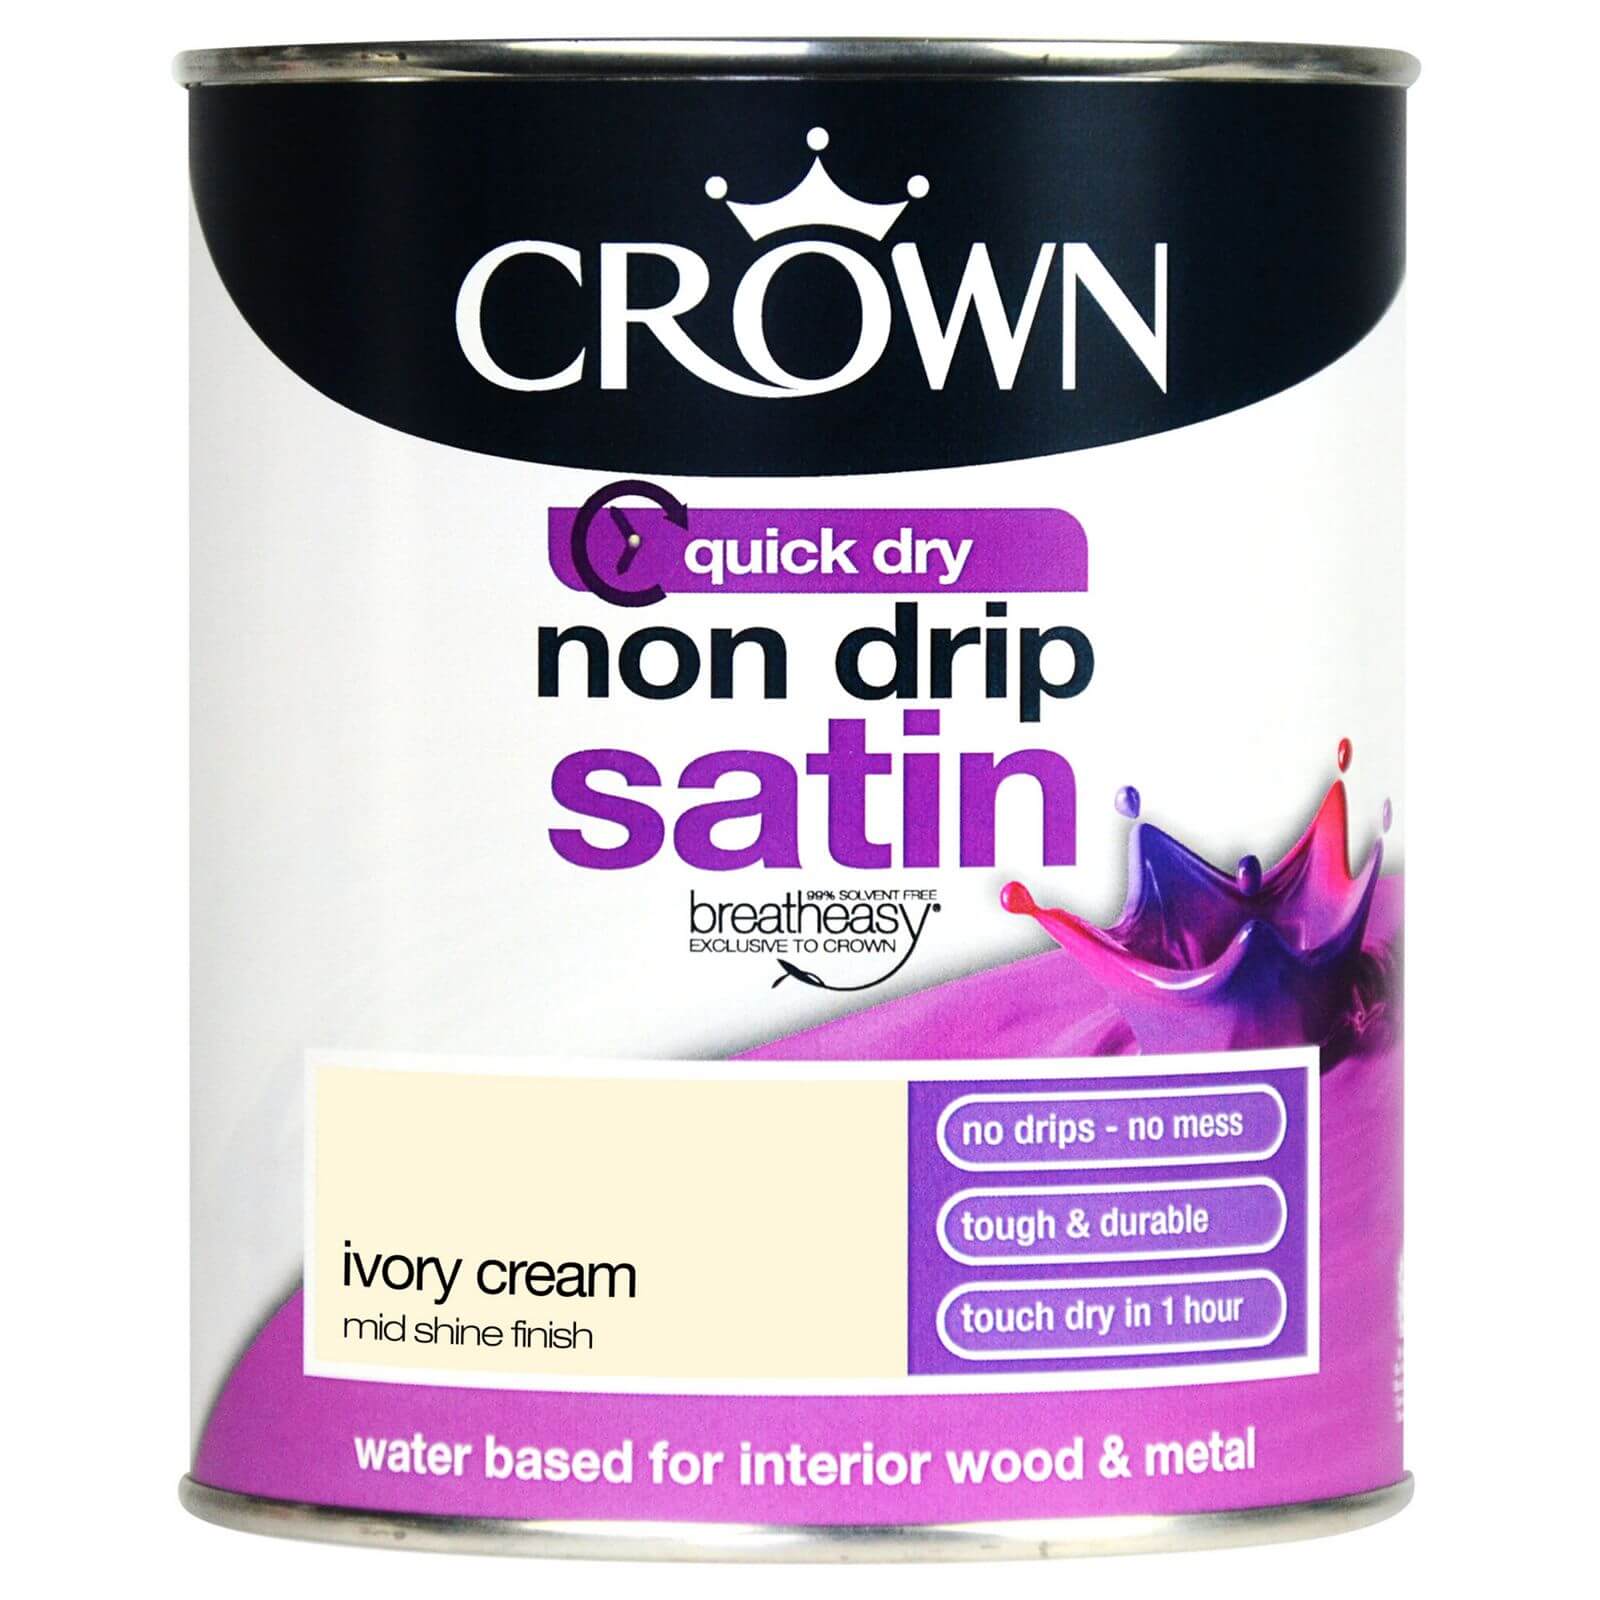 Crown Standard Breatheasy Non Drip Satin Paint Ivory Cream - 750ml